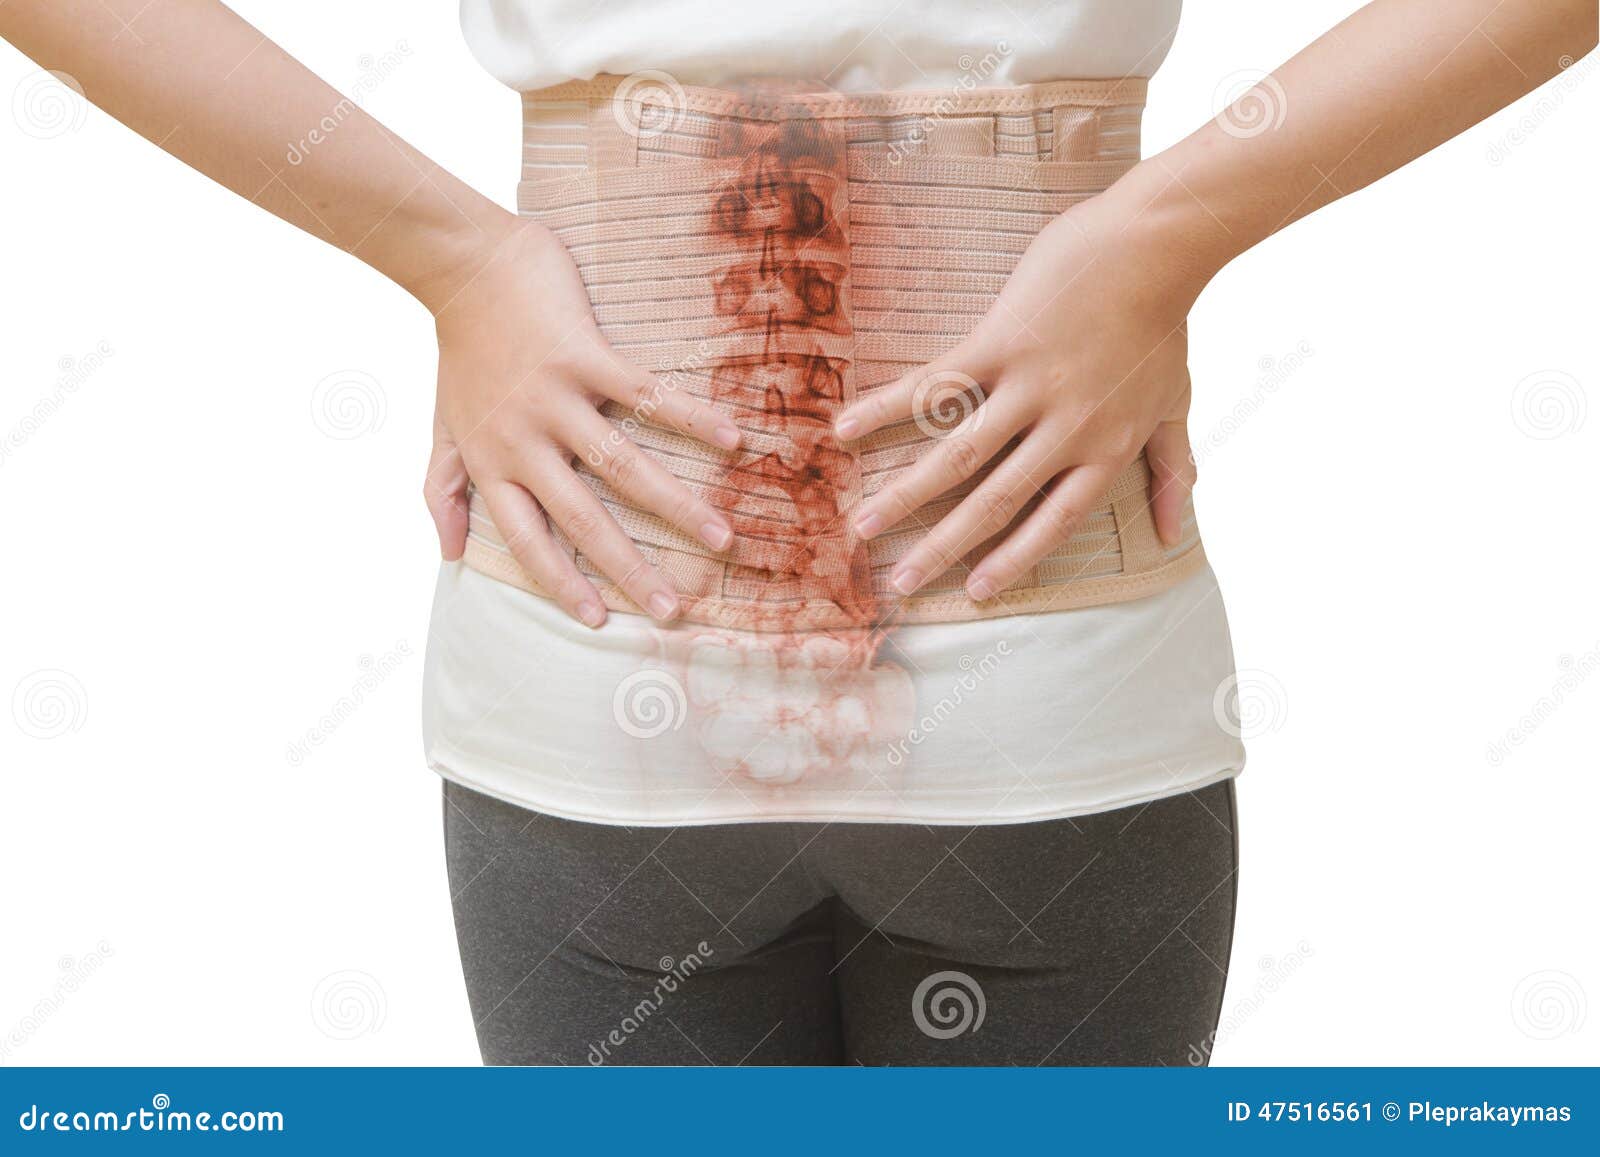 https://thumbs.dreamstime.com/z/woman-back-pain-spinal-injury-wearing-lumbar-brace-corse-corset-47516561.jpg